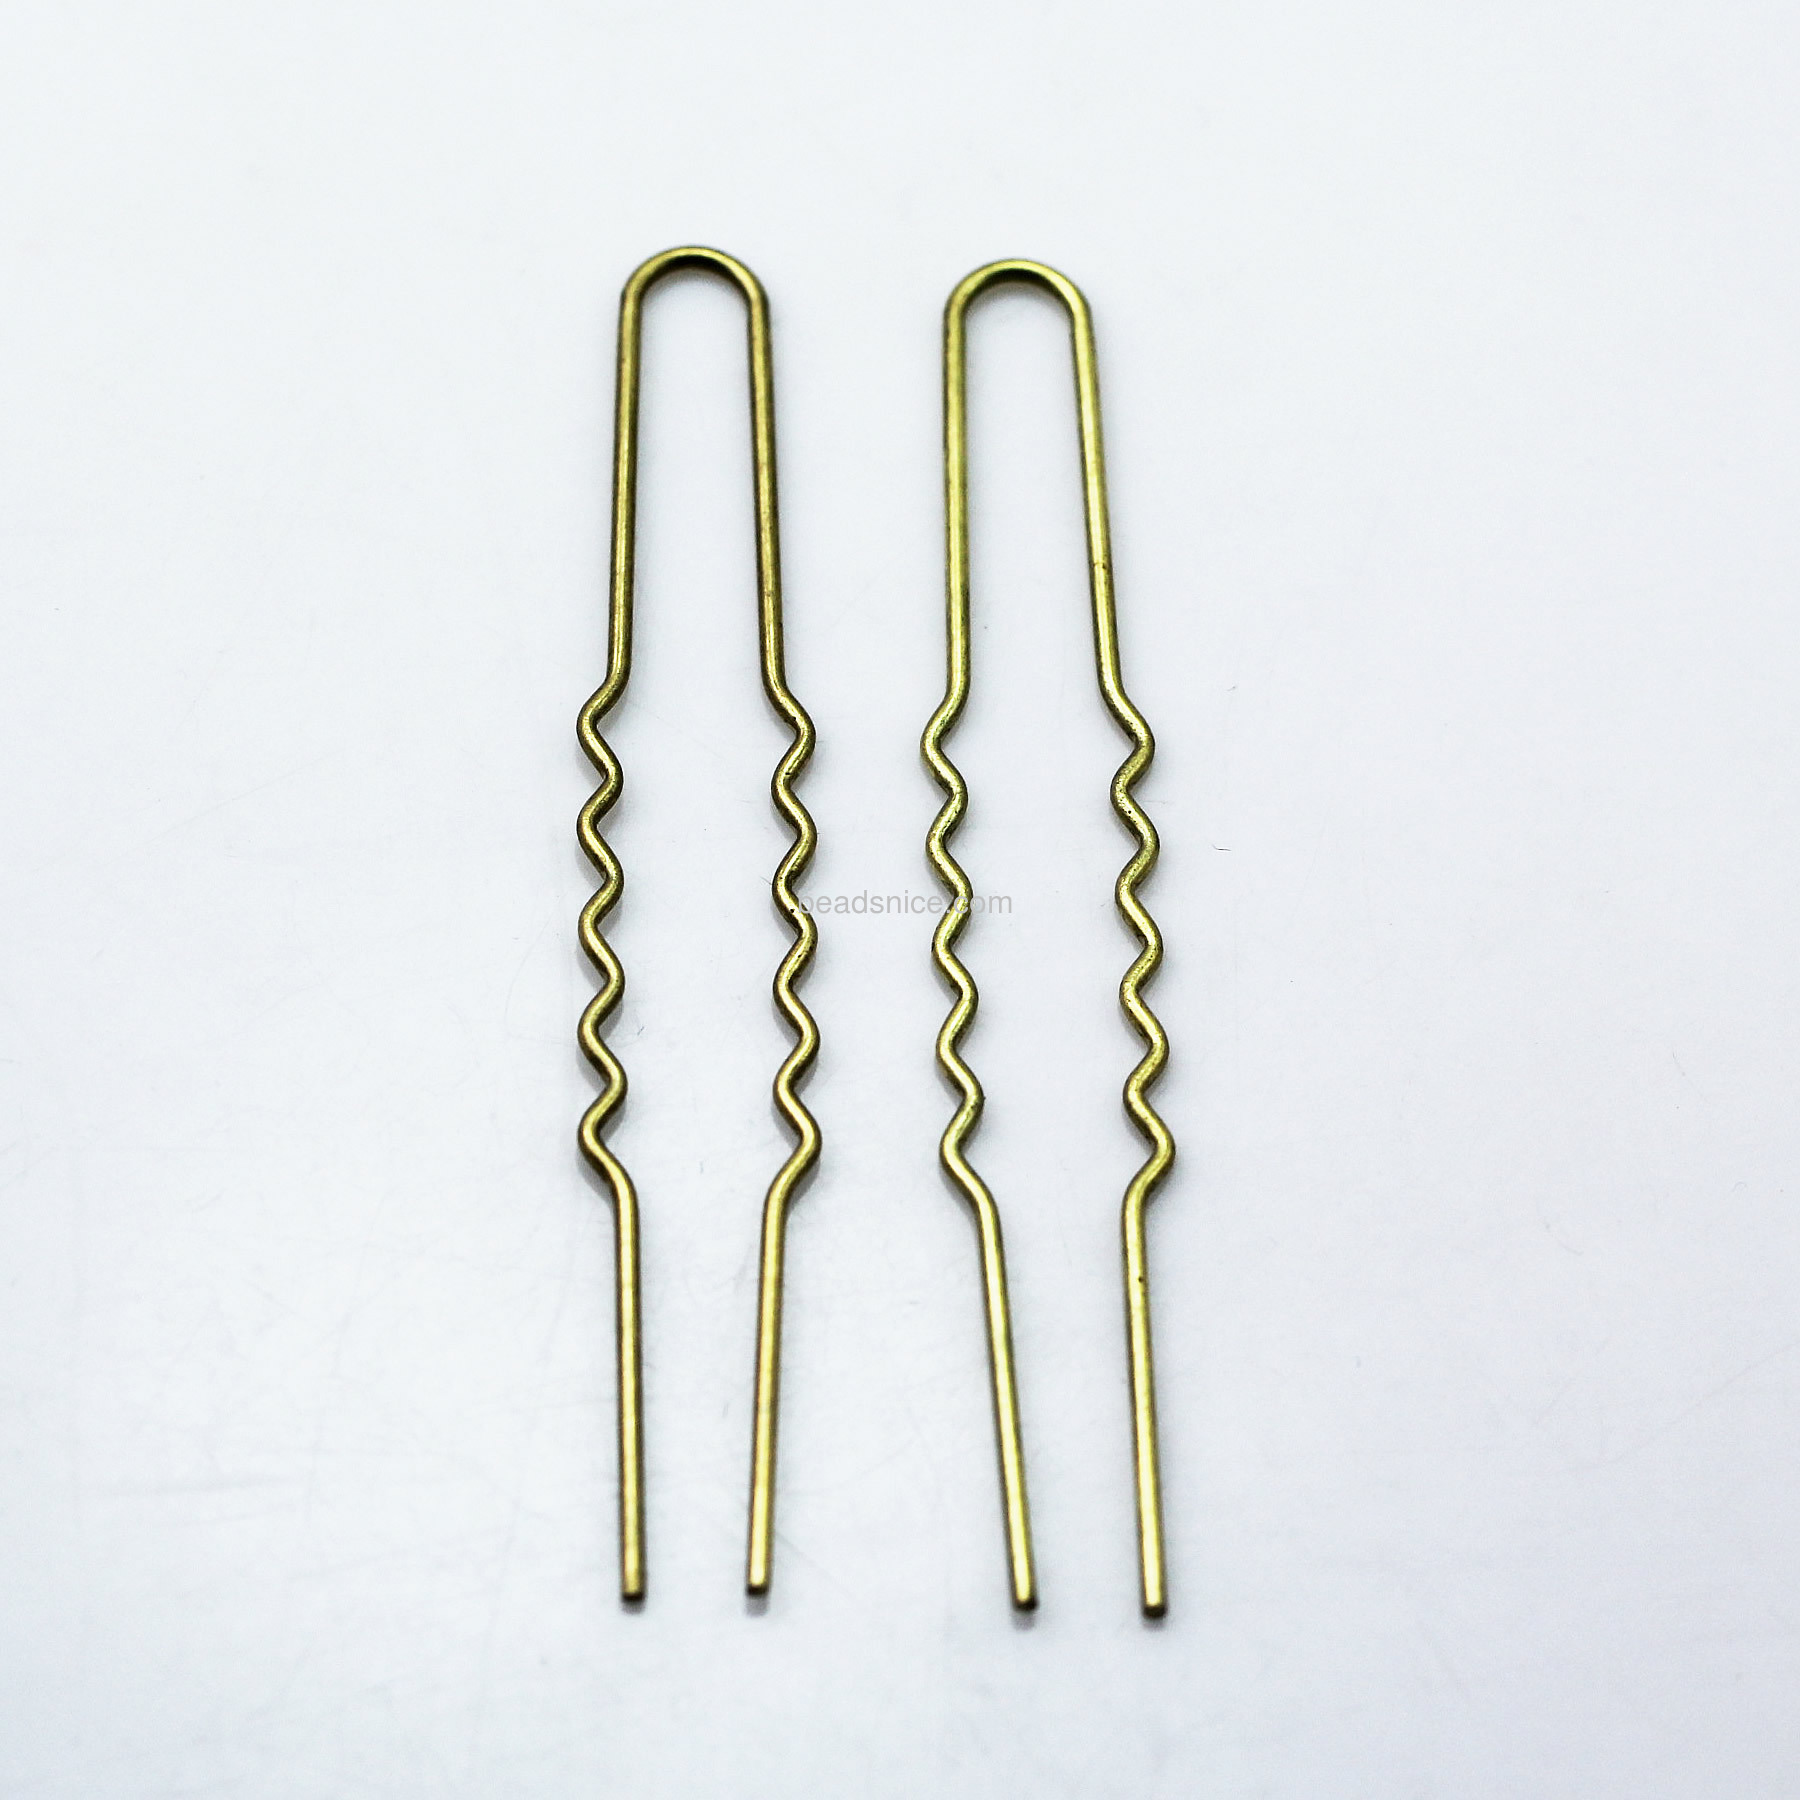 Hairpins hair clip Hair Jewelry findings brass length75x1 mm